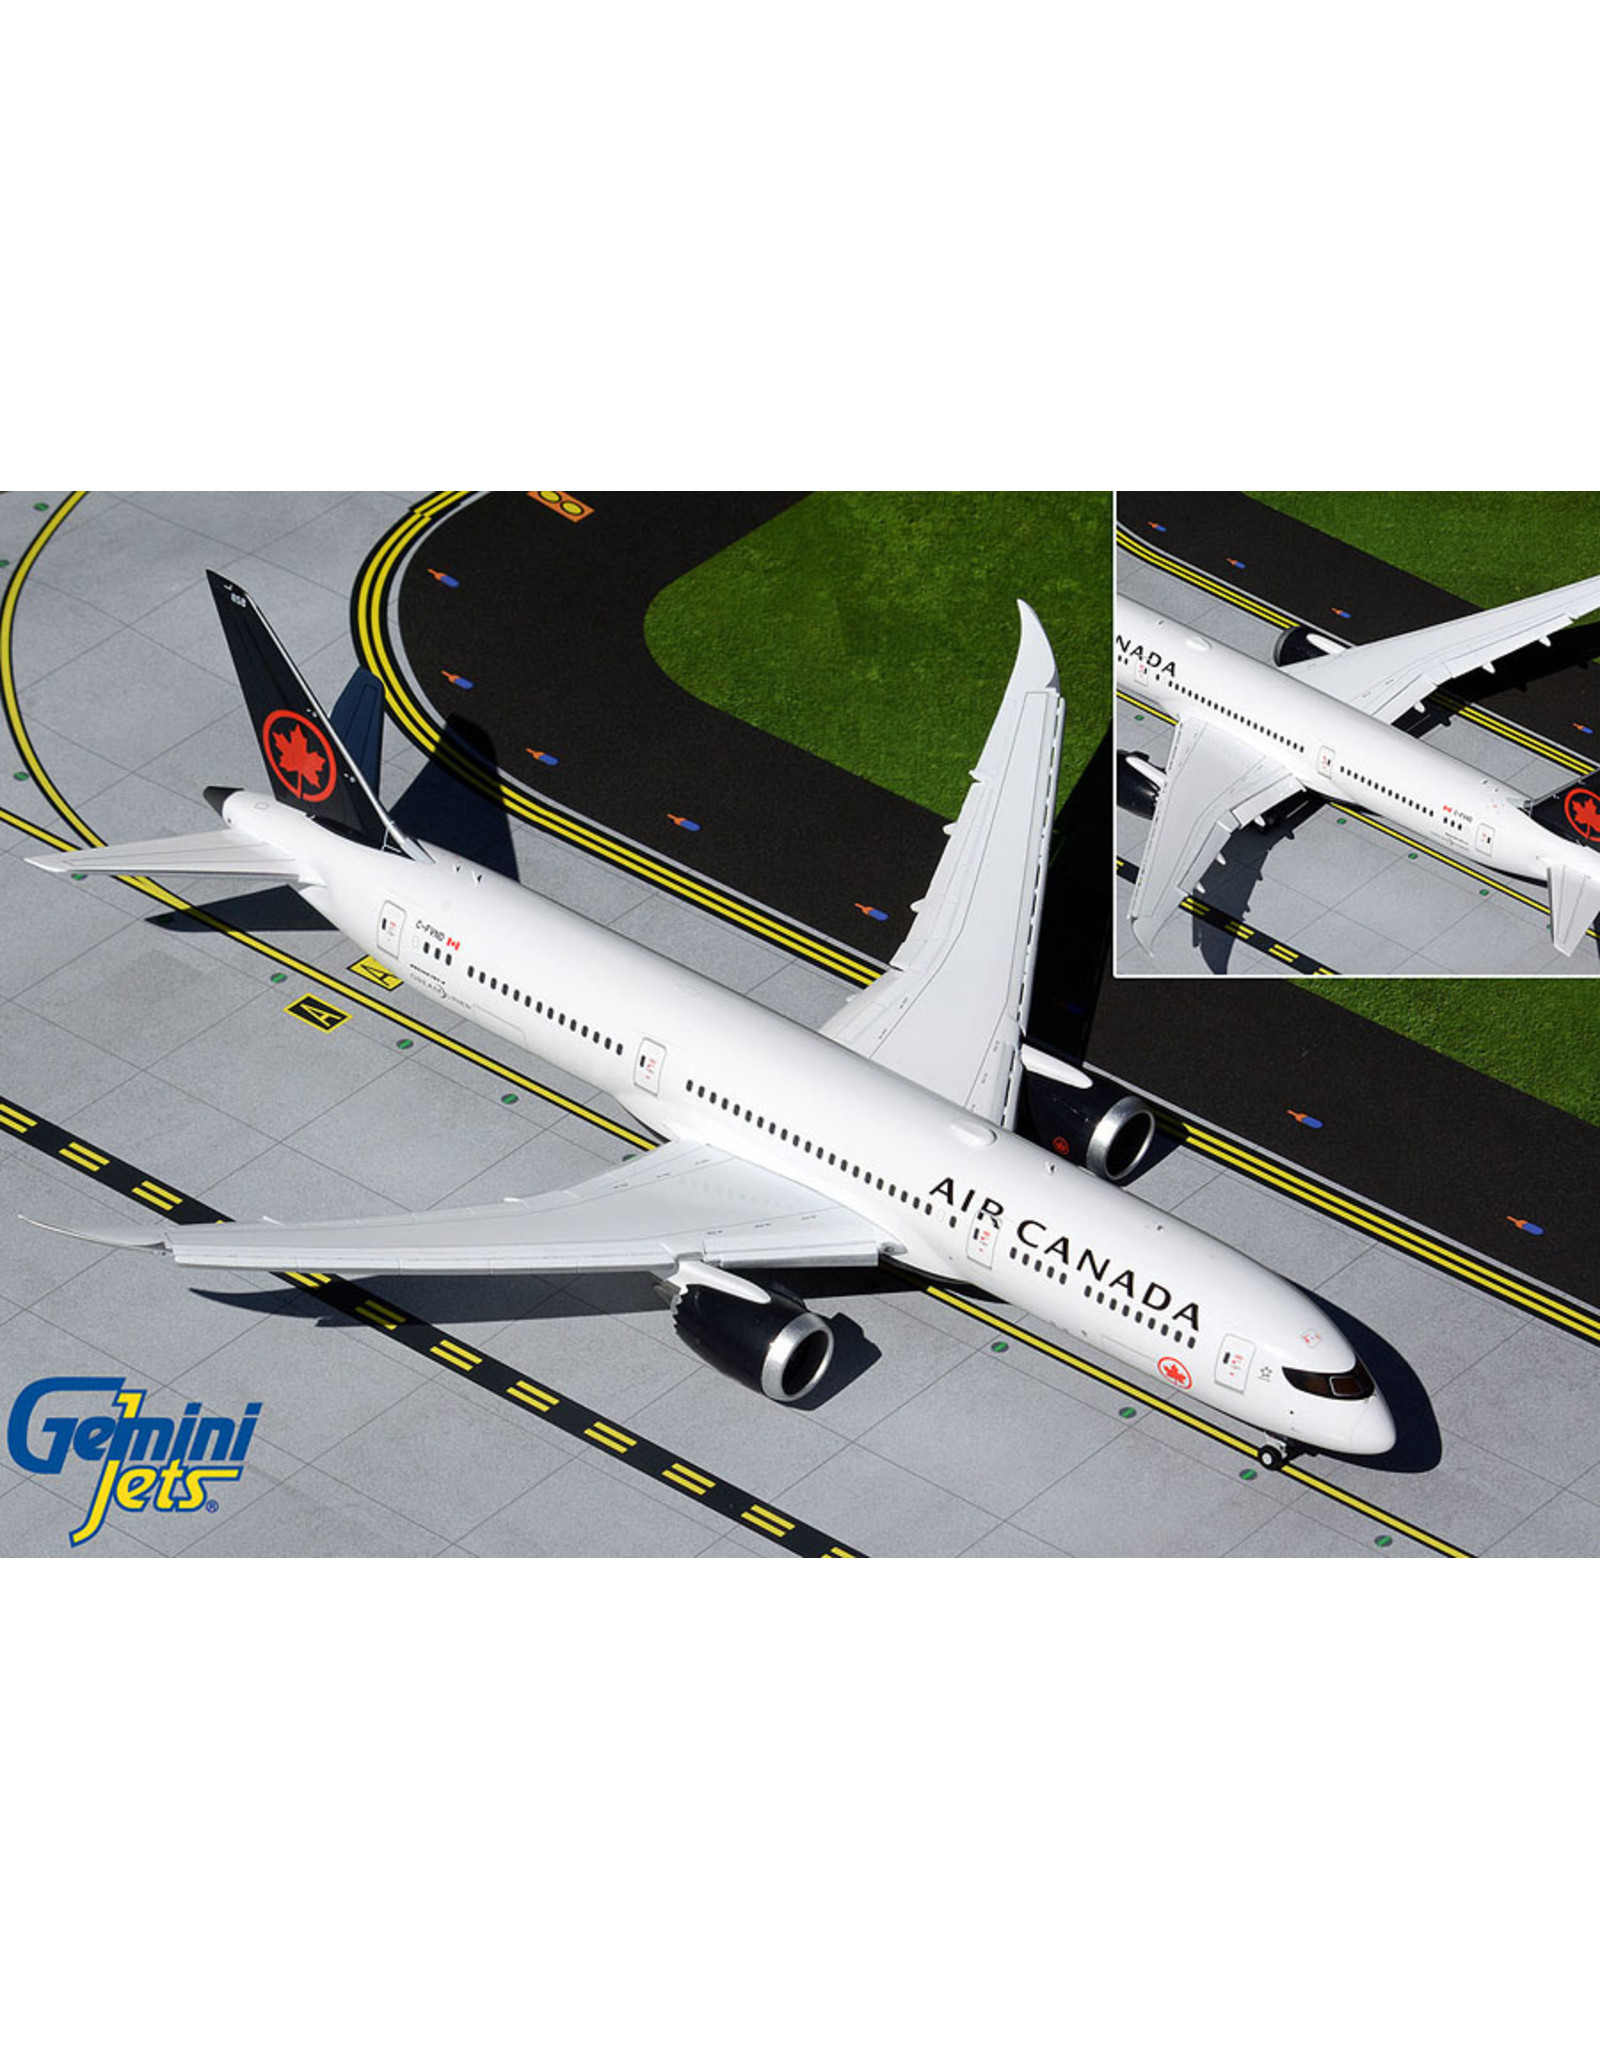 Gemini Gem2 Air Canada 787-9 C-FVND flaps down